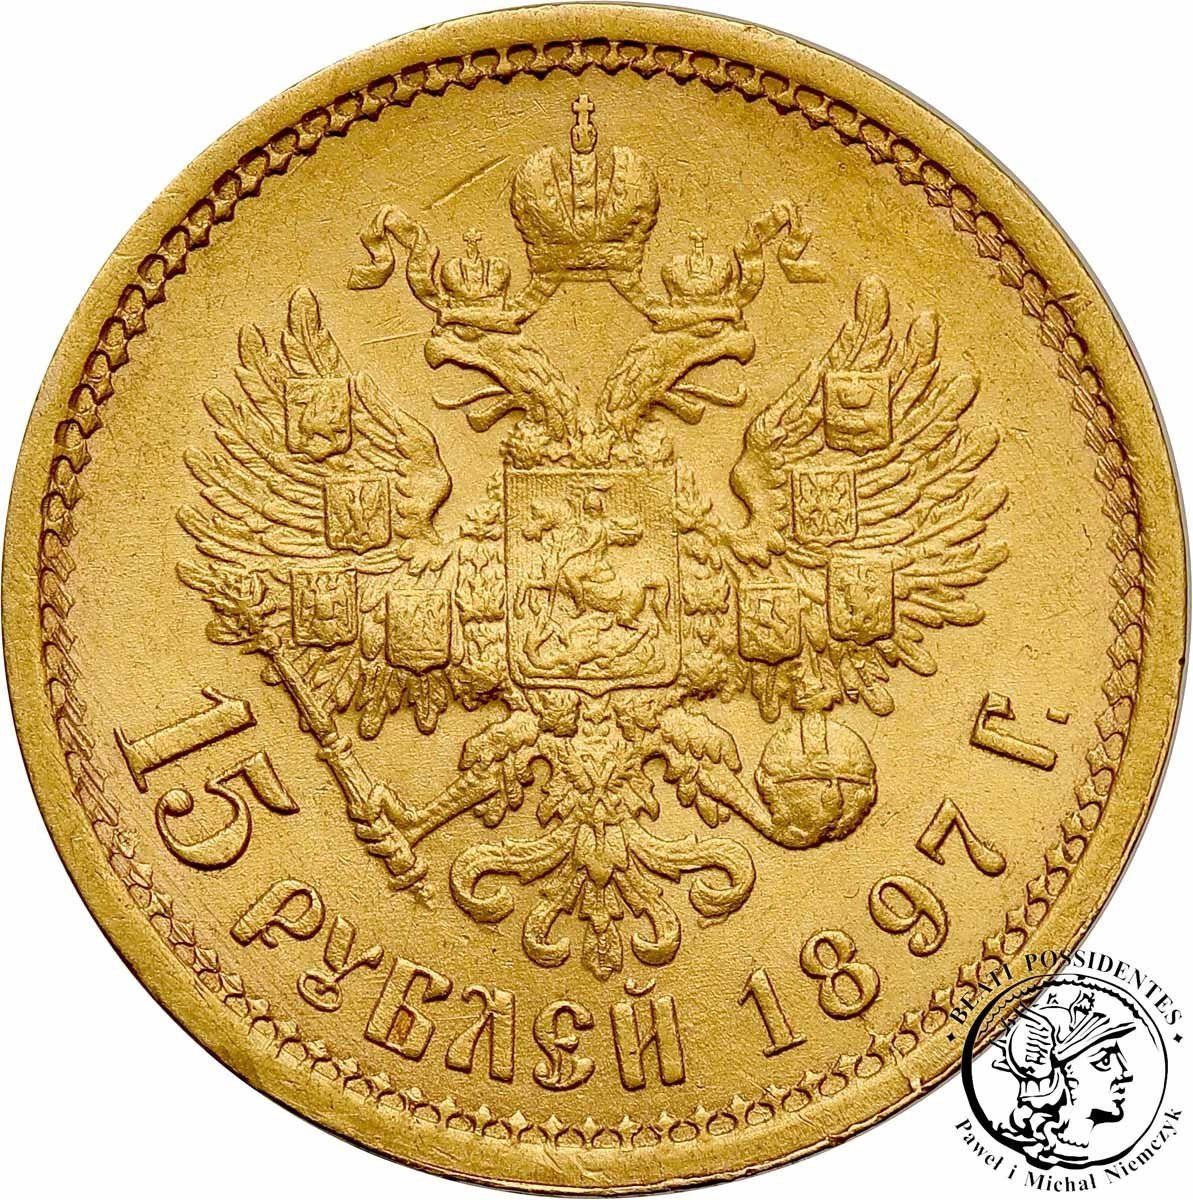 Rosja 15 Rubli 1897 odmiana wąska st.1-